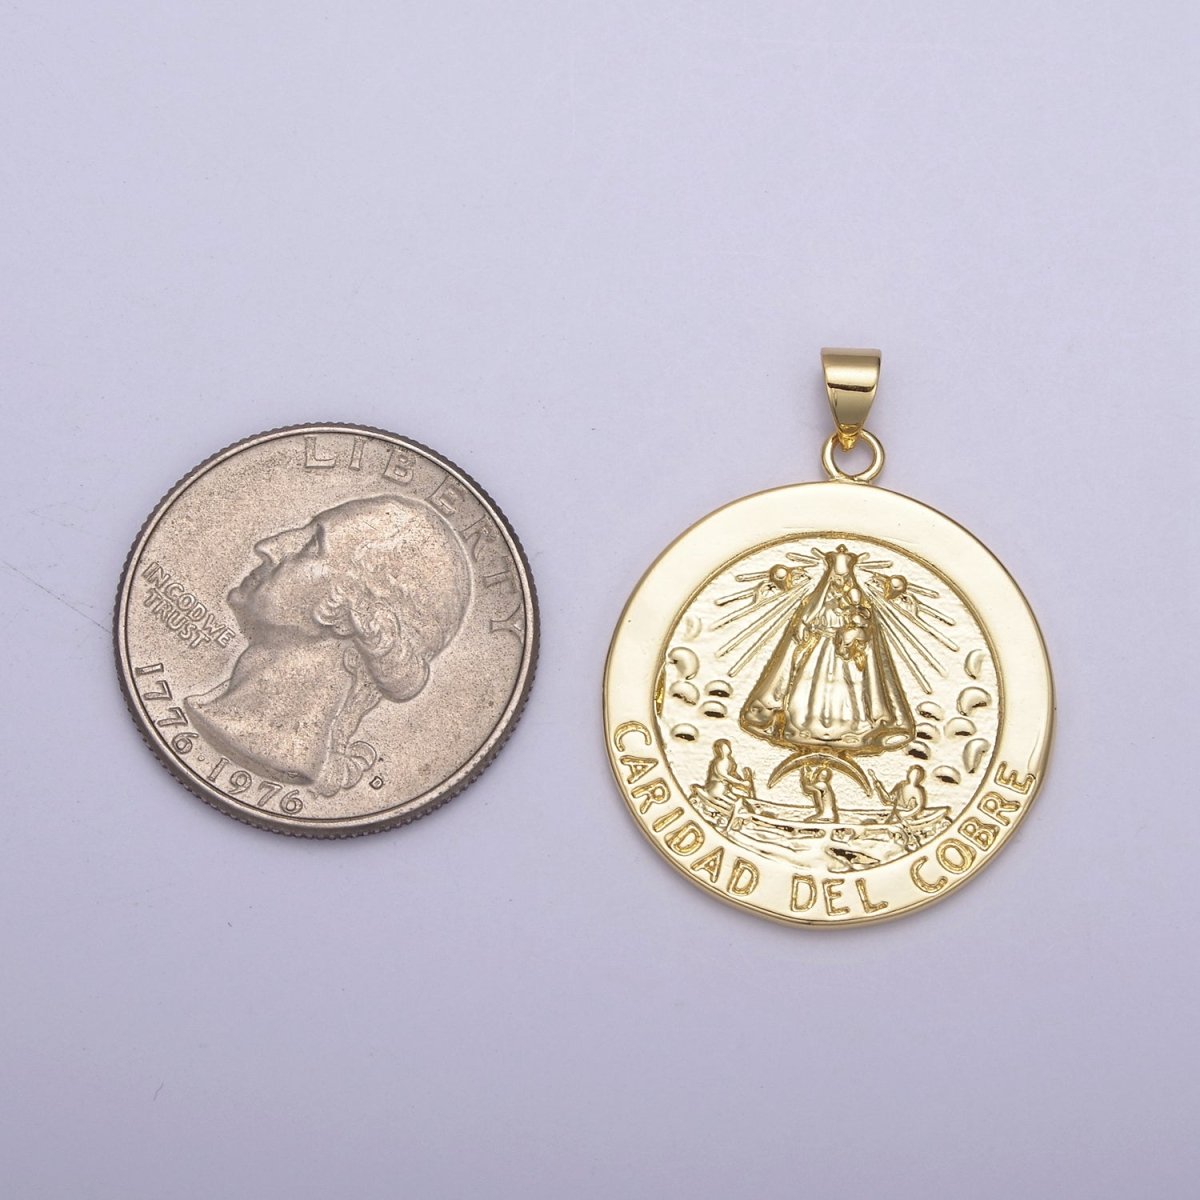 Gold Coin La Virgen de la Caridad del Cobre Pendant for Necklace Supply H-863 - DLUXCA